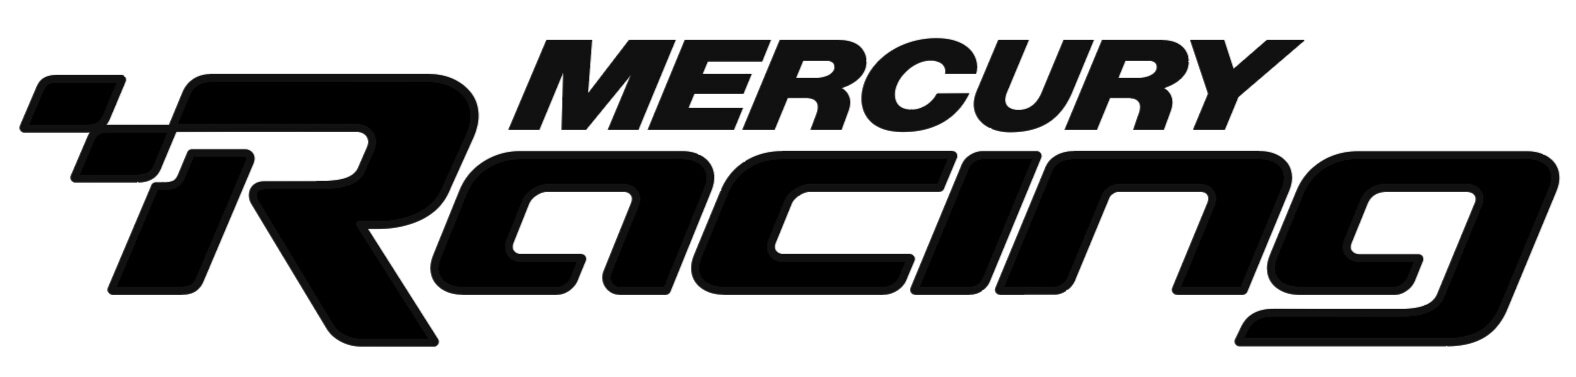 mercury-racing-logo.jpg